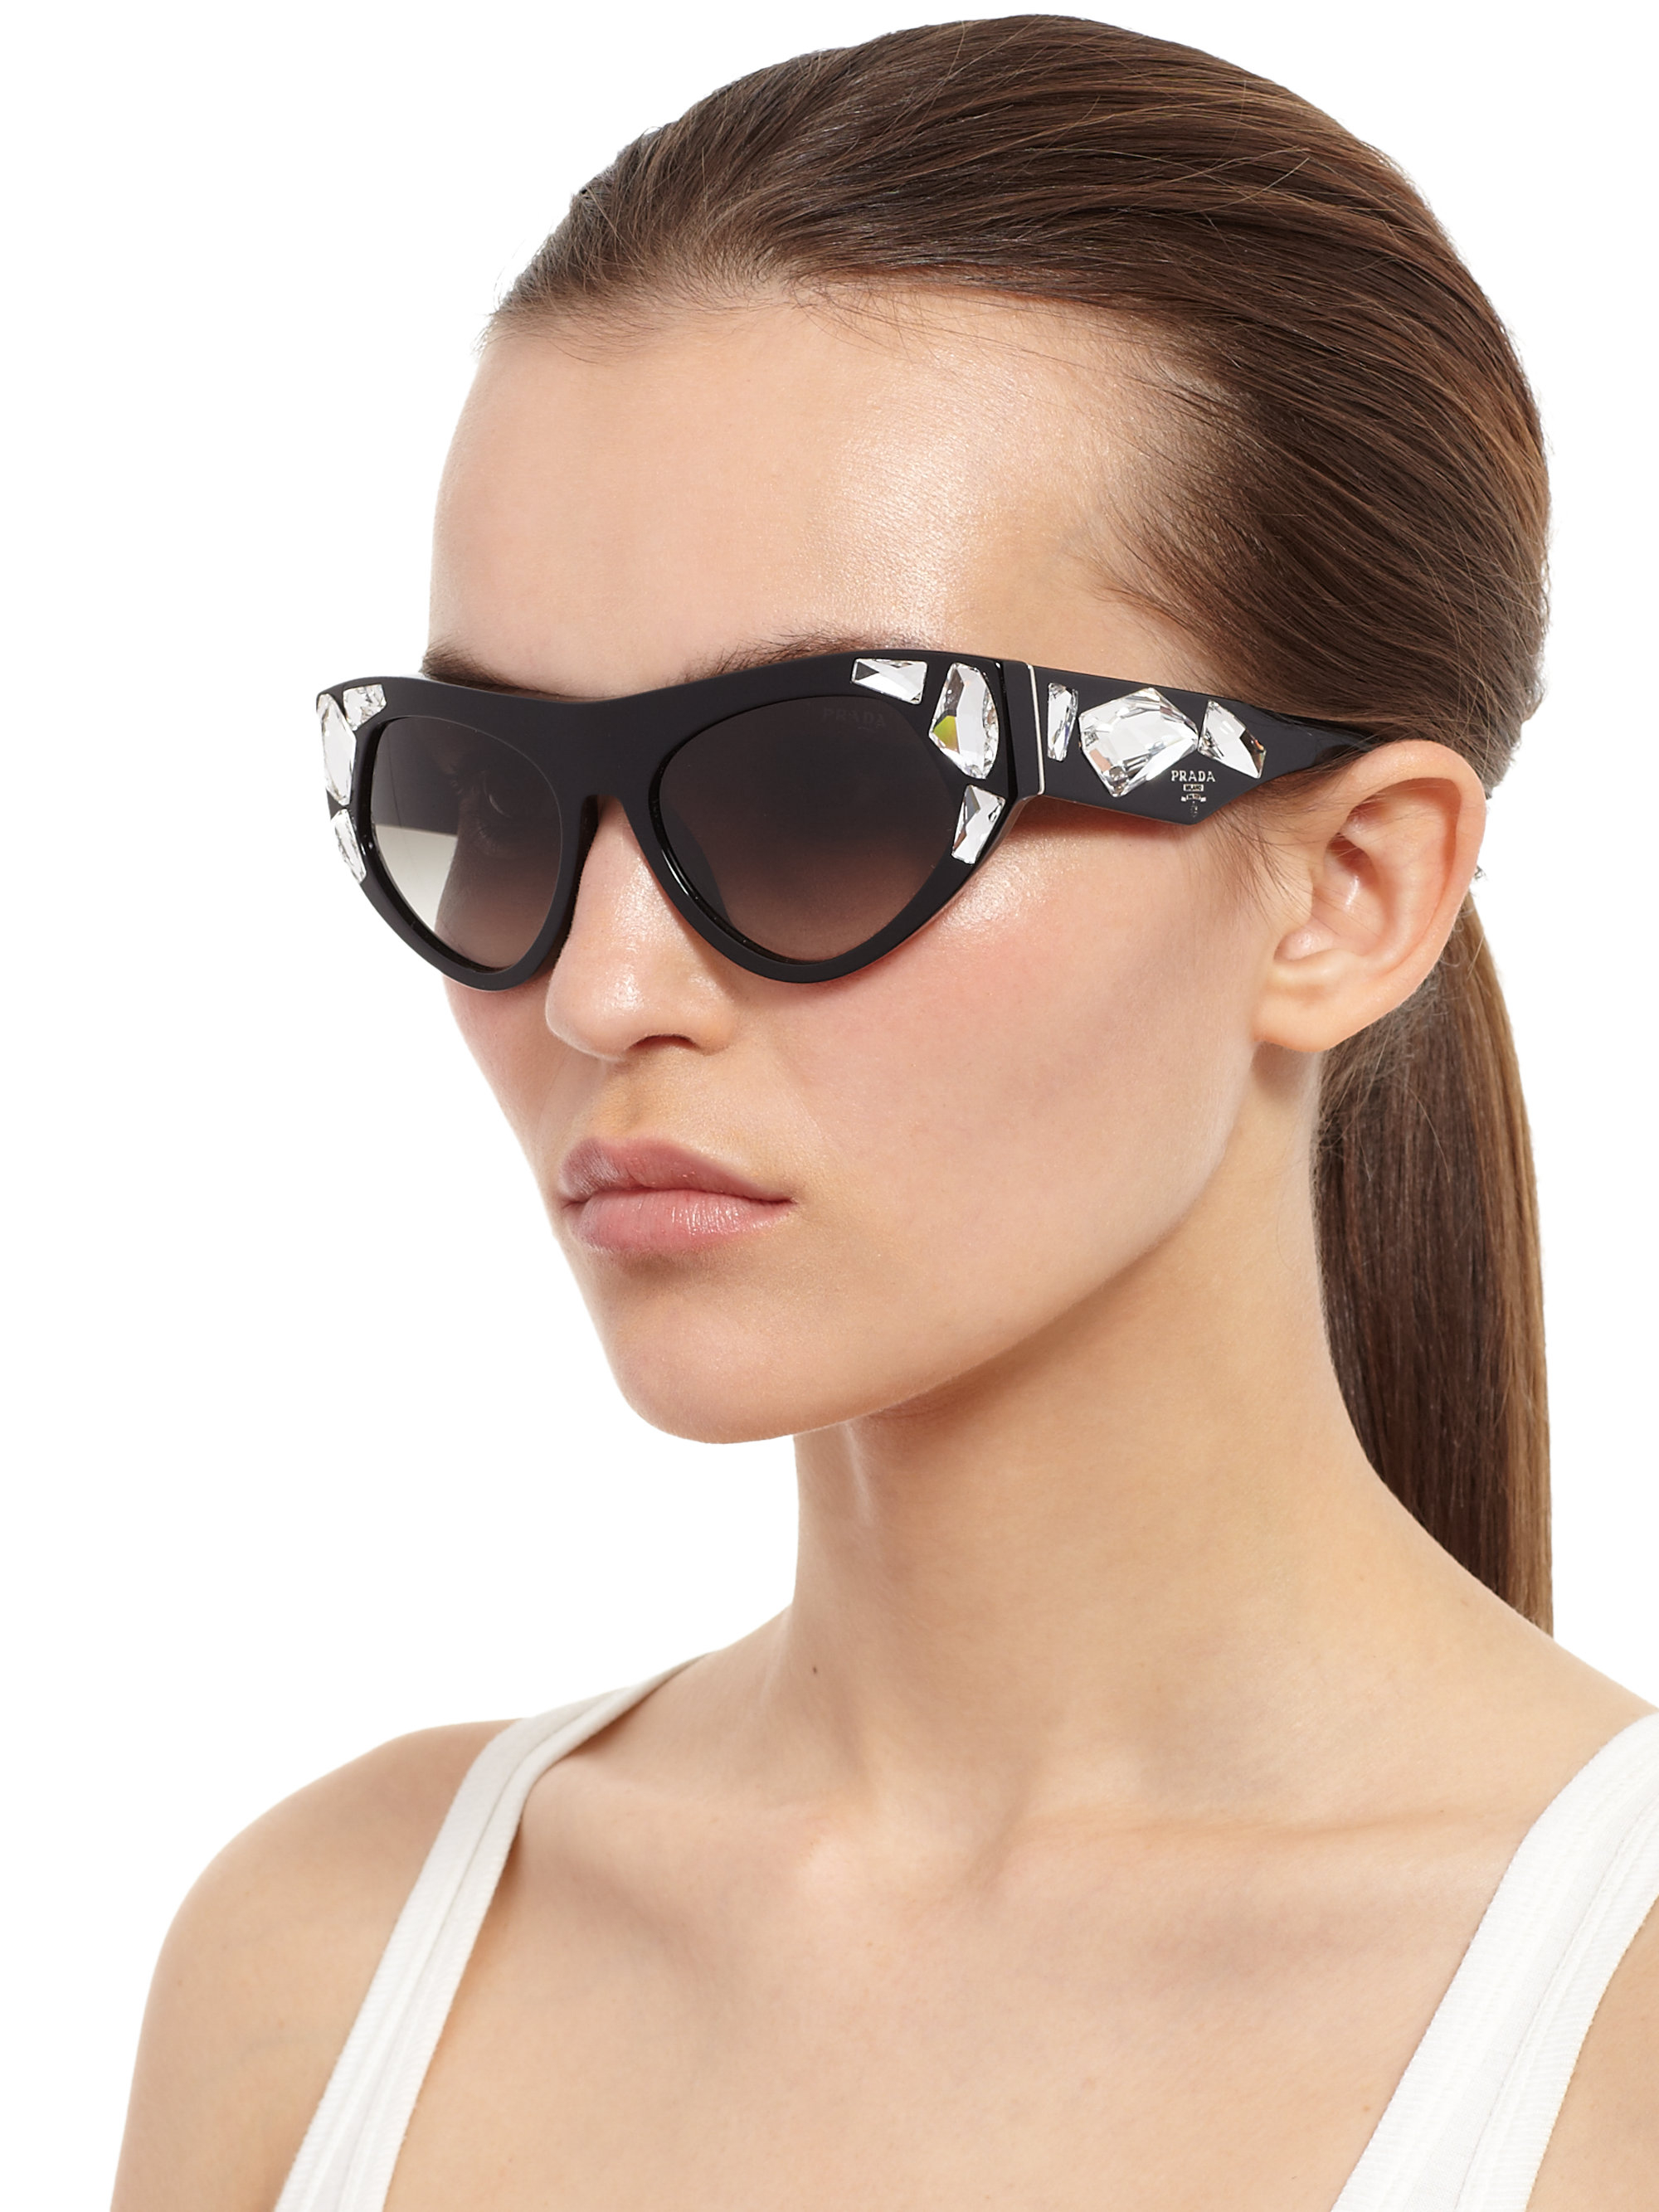 How To Tighten Sunglasses - worldwindesigns